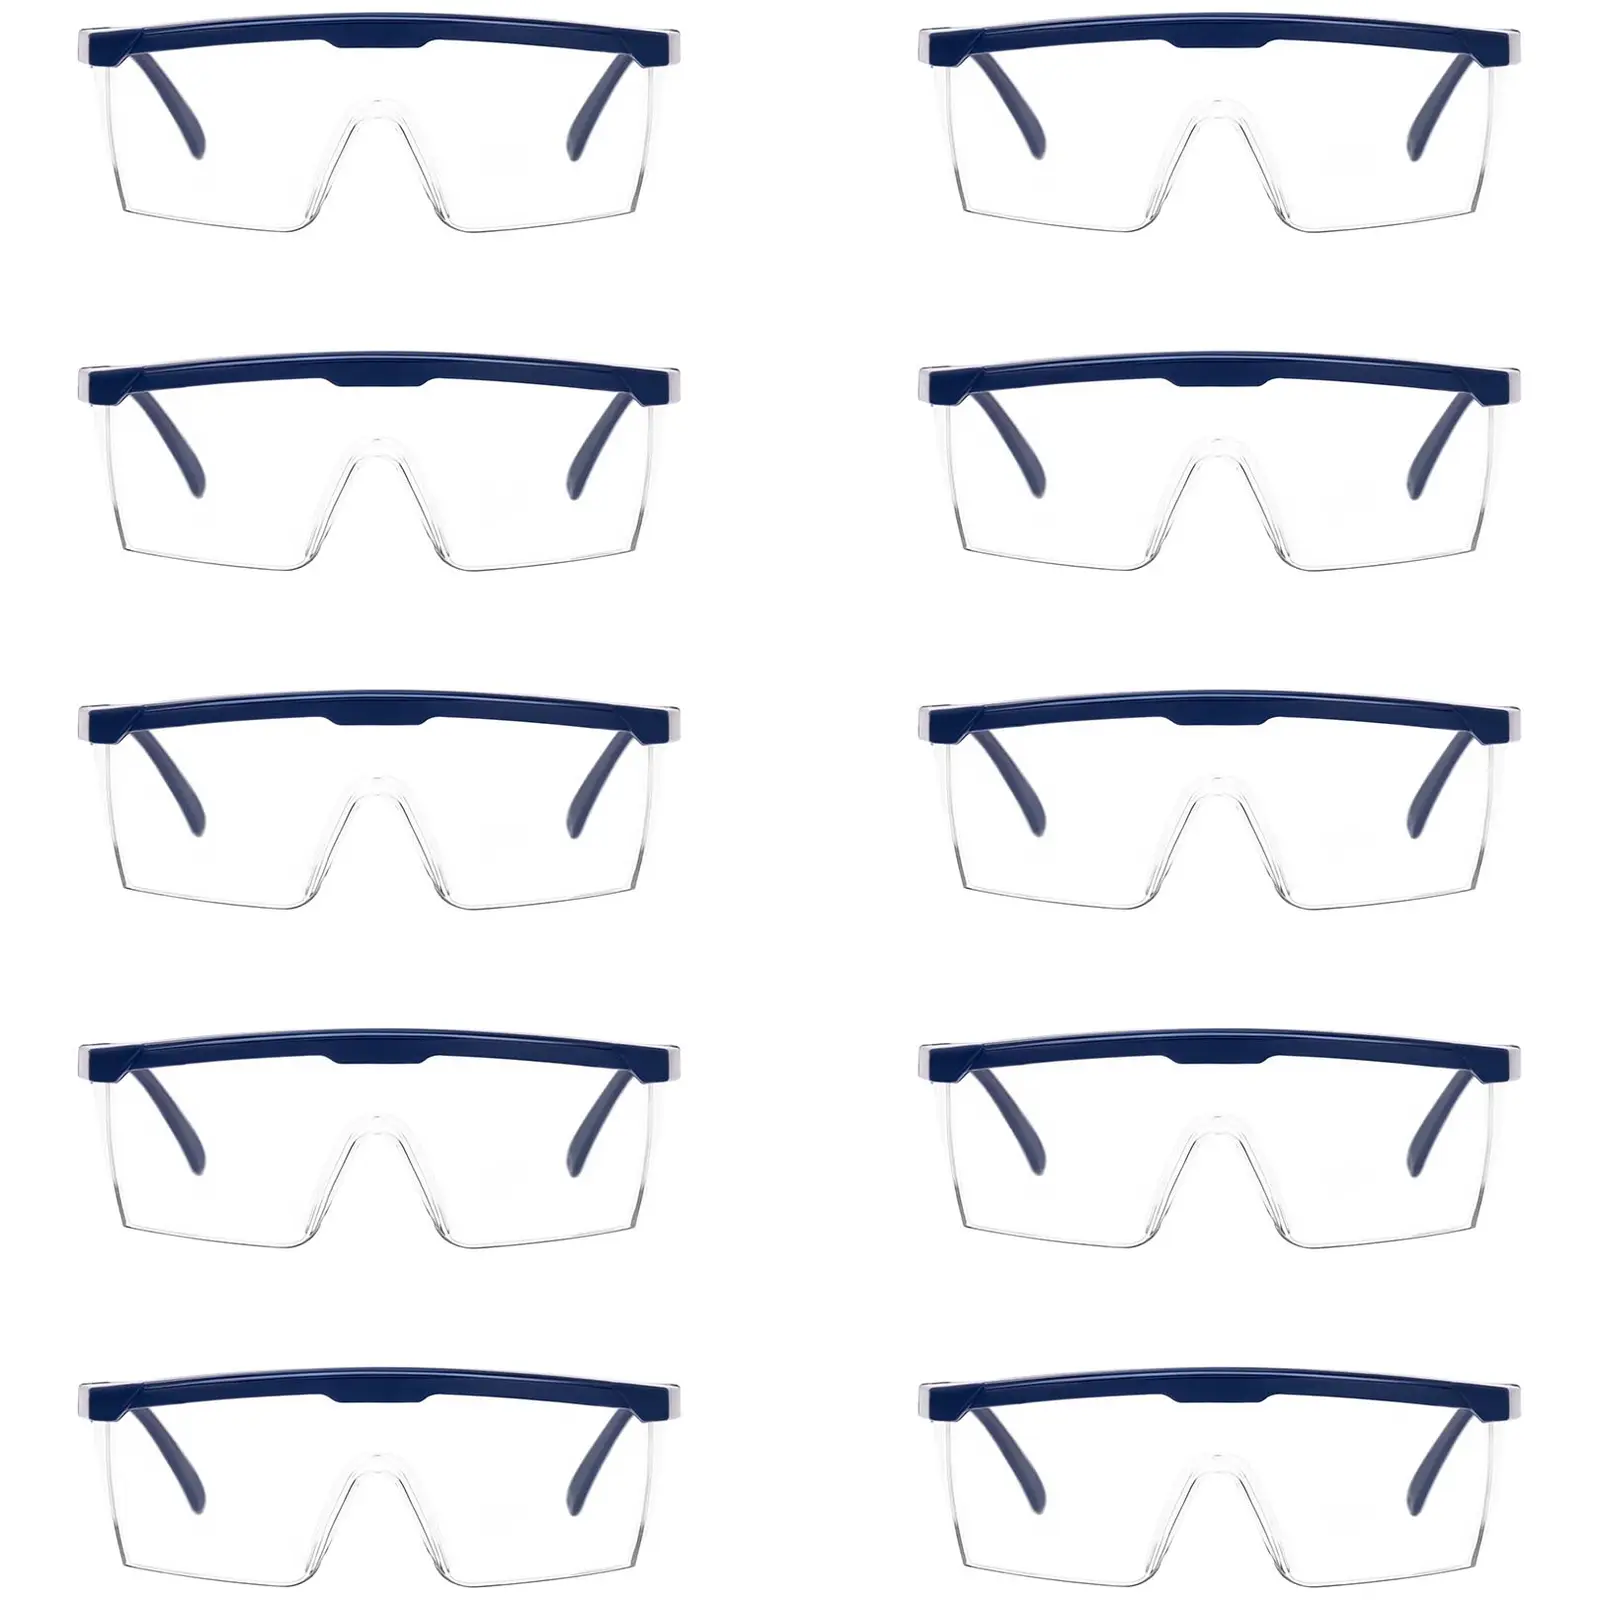 TECTOR beskyttelsesbriller - klart glas - EN166 - justerbare - 10 stk.